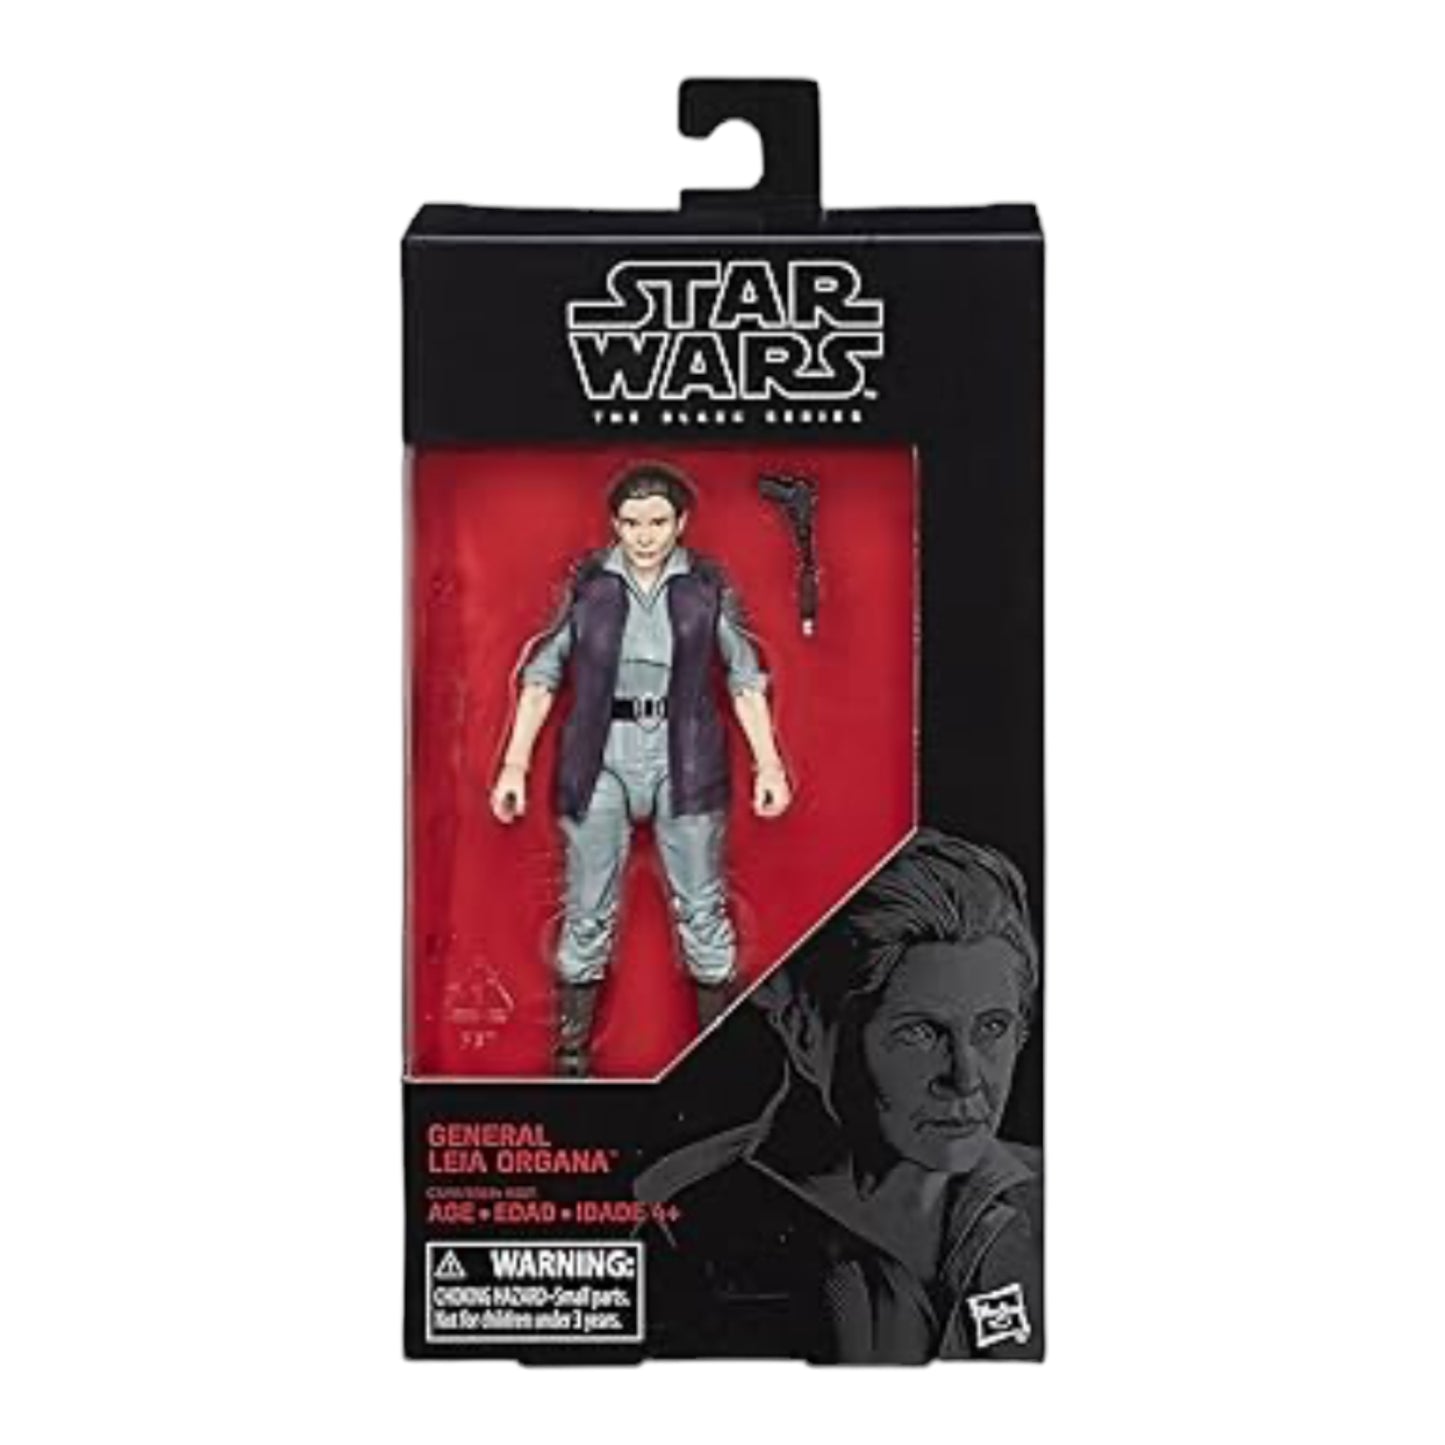 The Black Series Star Wars Figura General Leia Organa